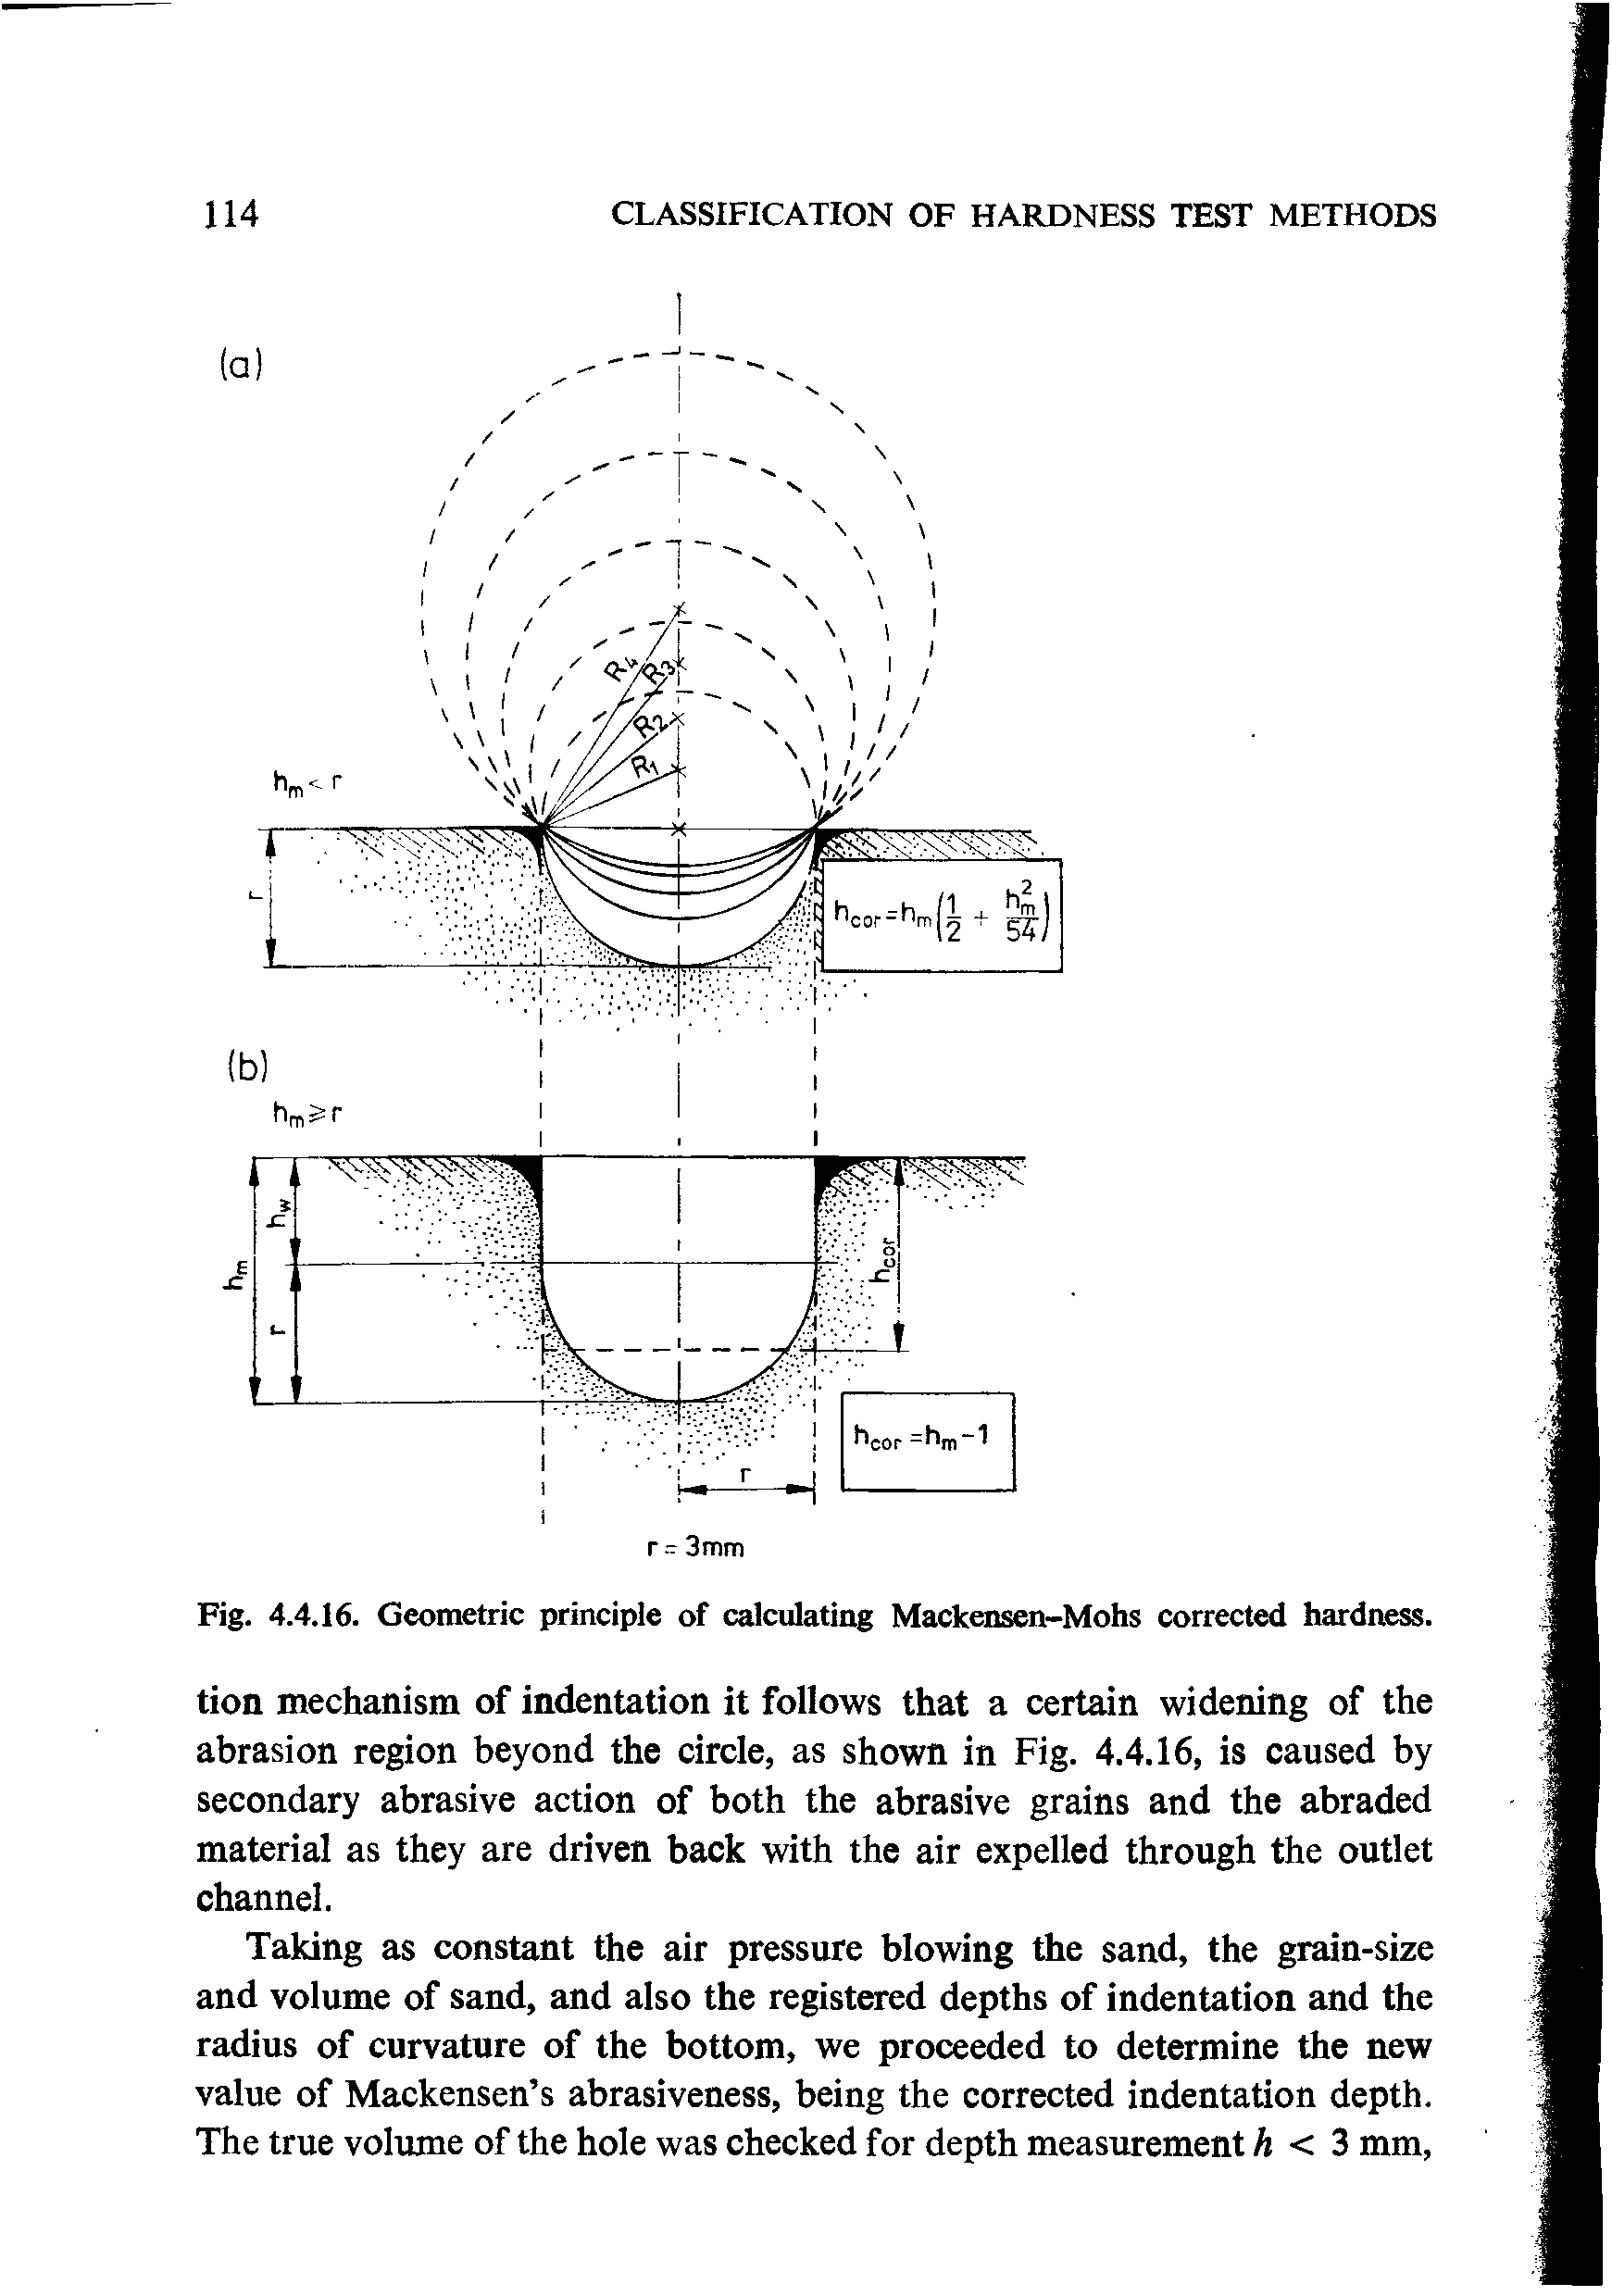 Fig. 4.4.16. Geometric principle of calculating Mackensen-Mohs corrected hardness.